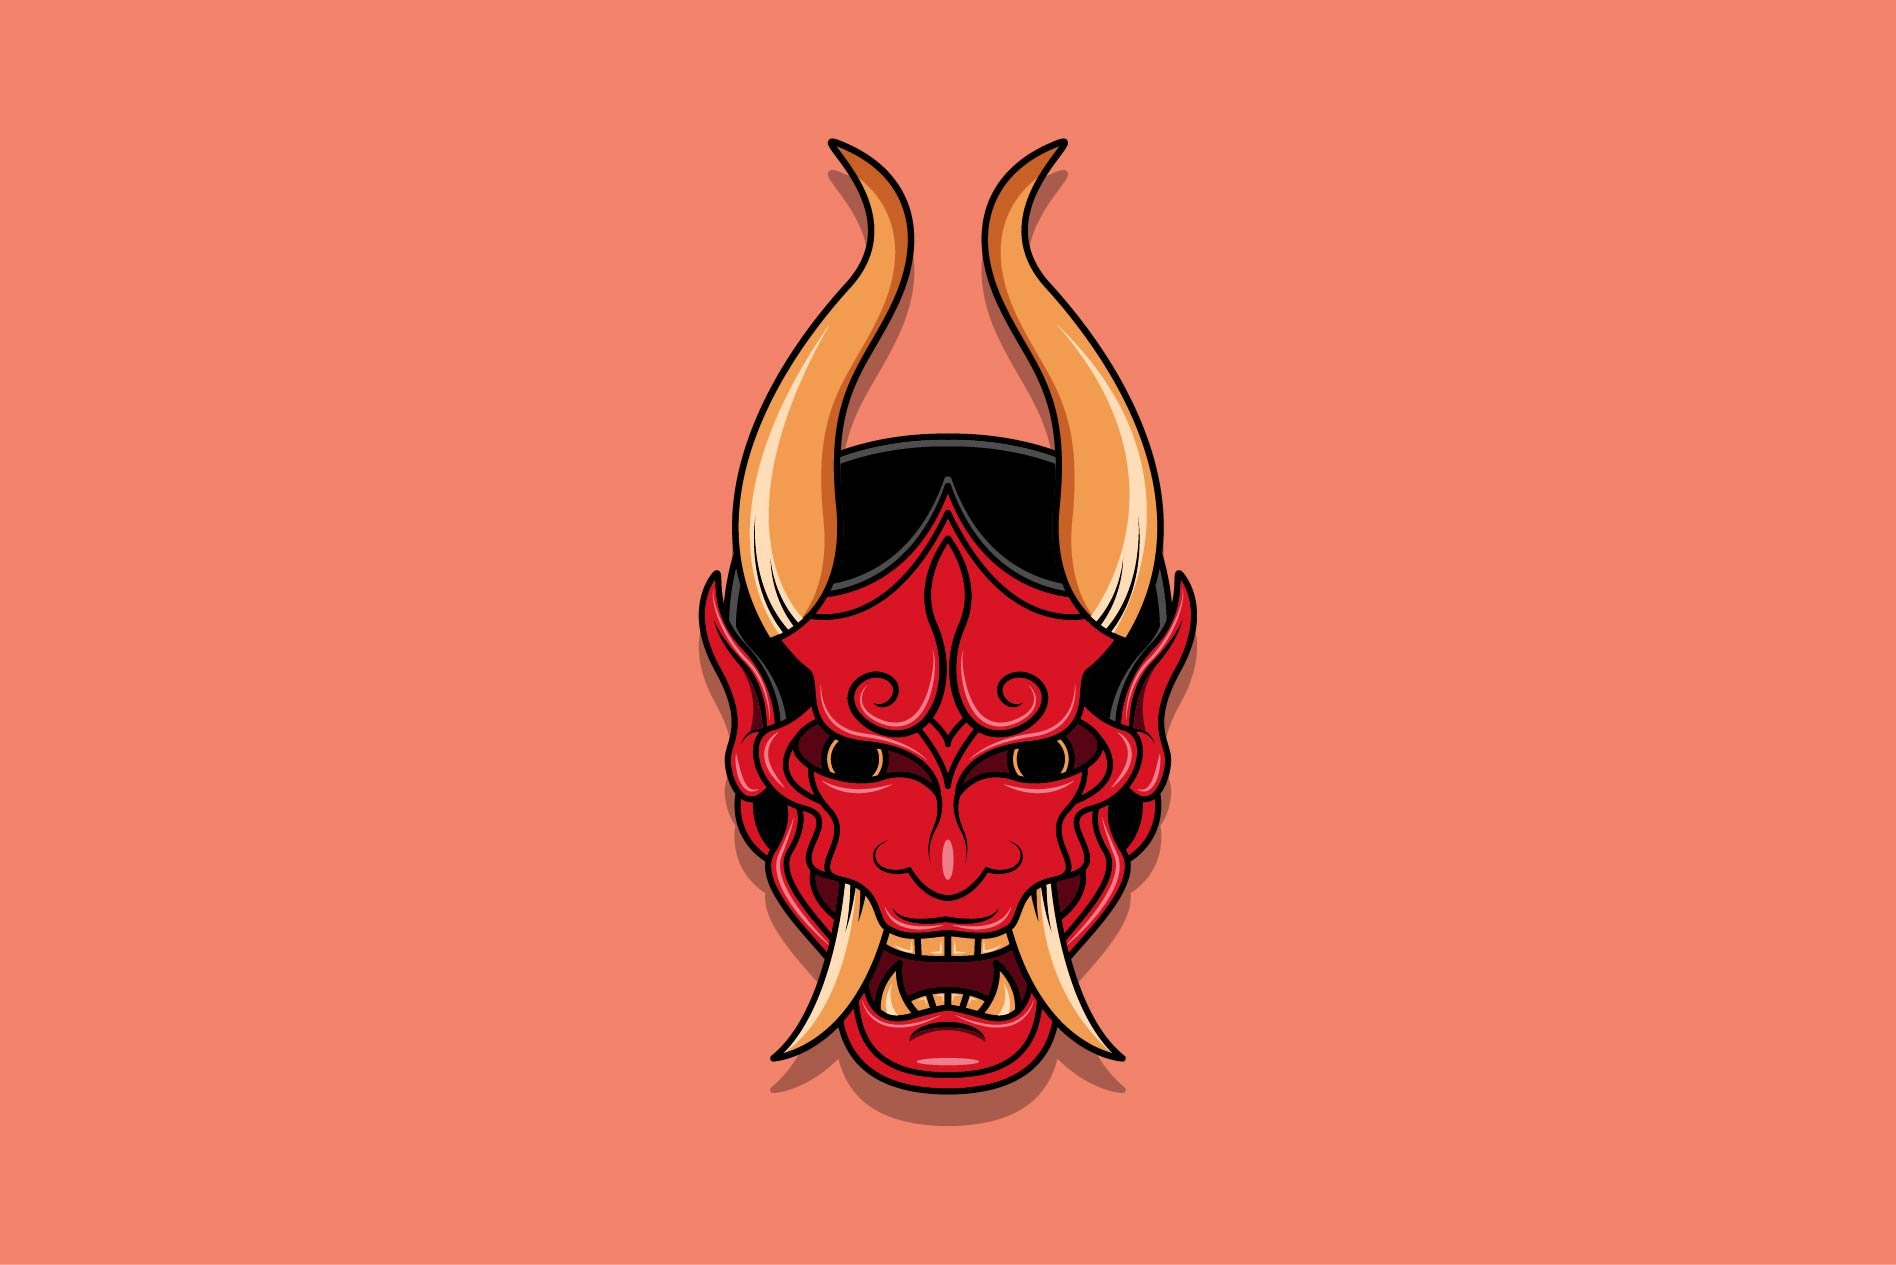 Oni japanese devil mask #11 cover image.